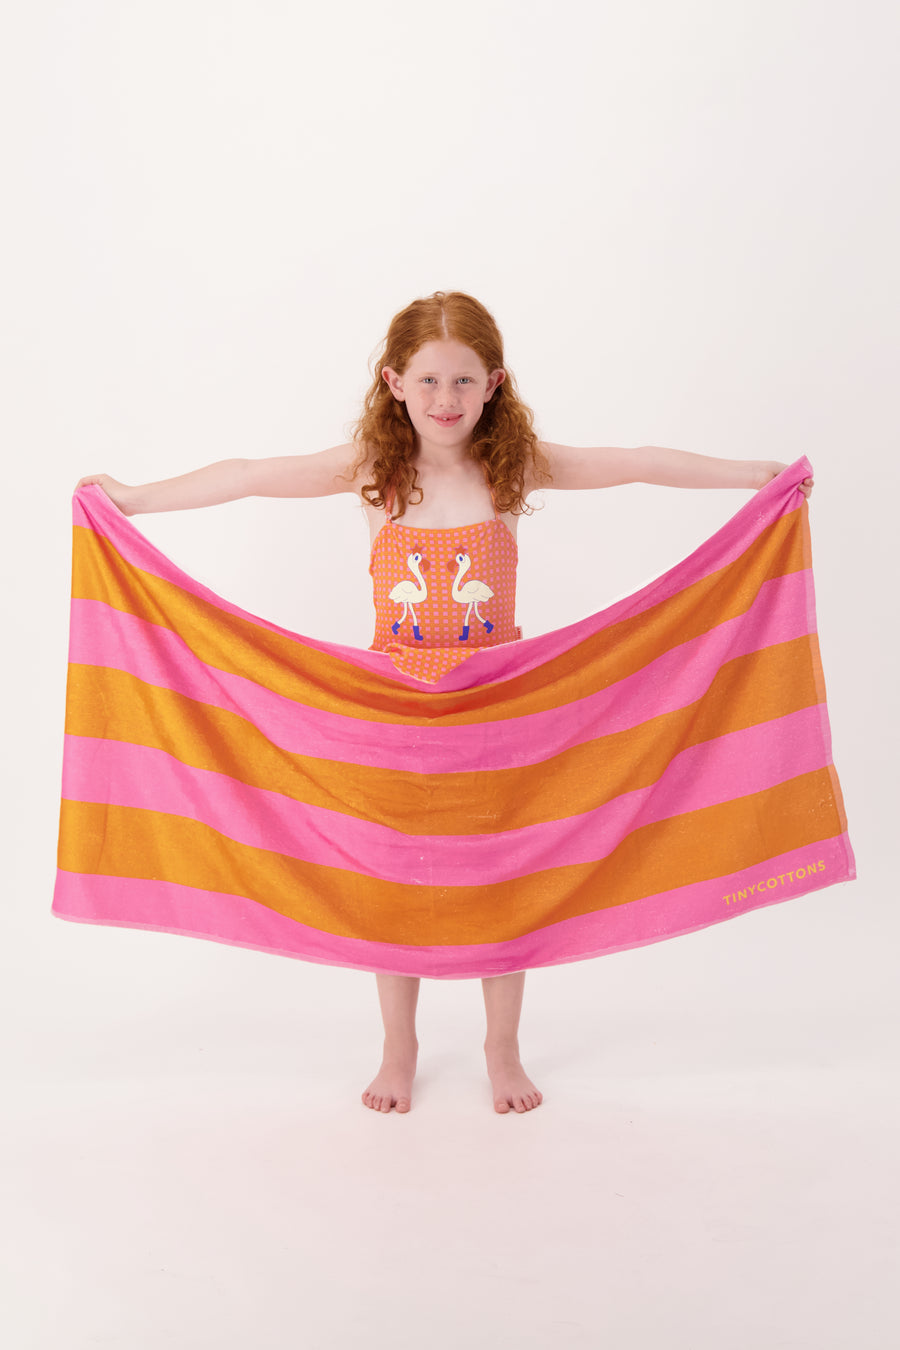 Stripes Towel | Marigold / Dark Pink